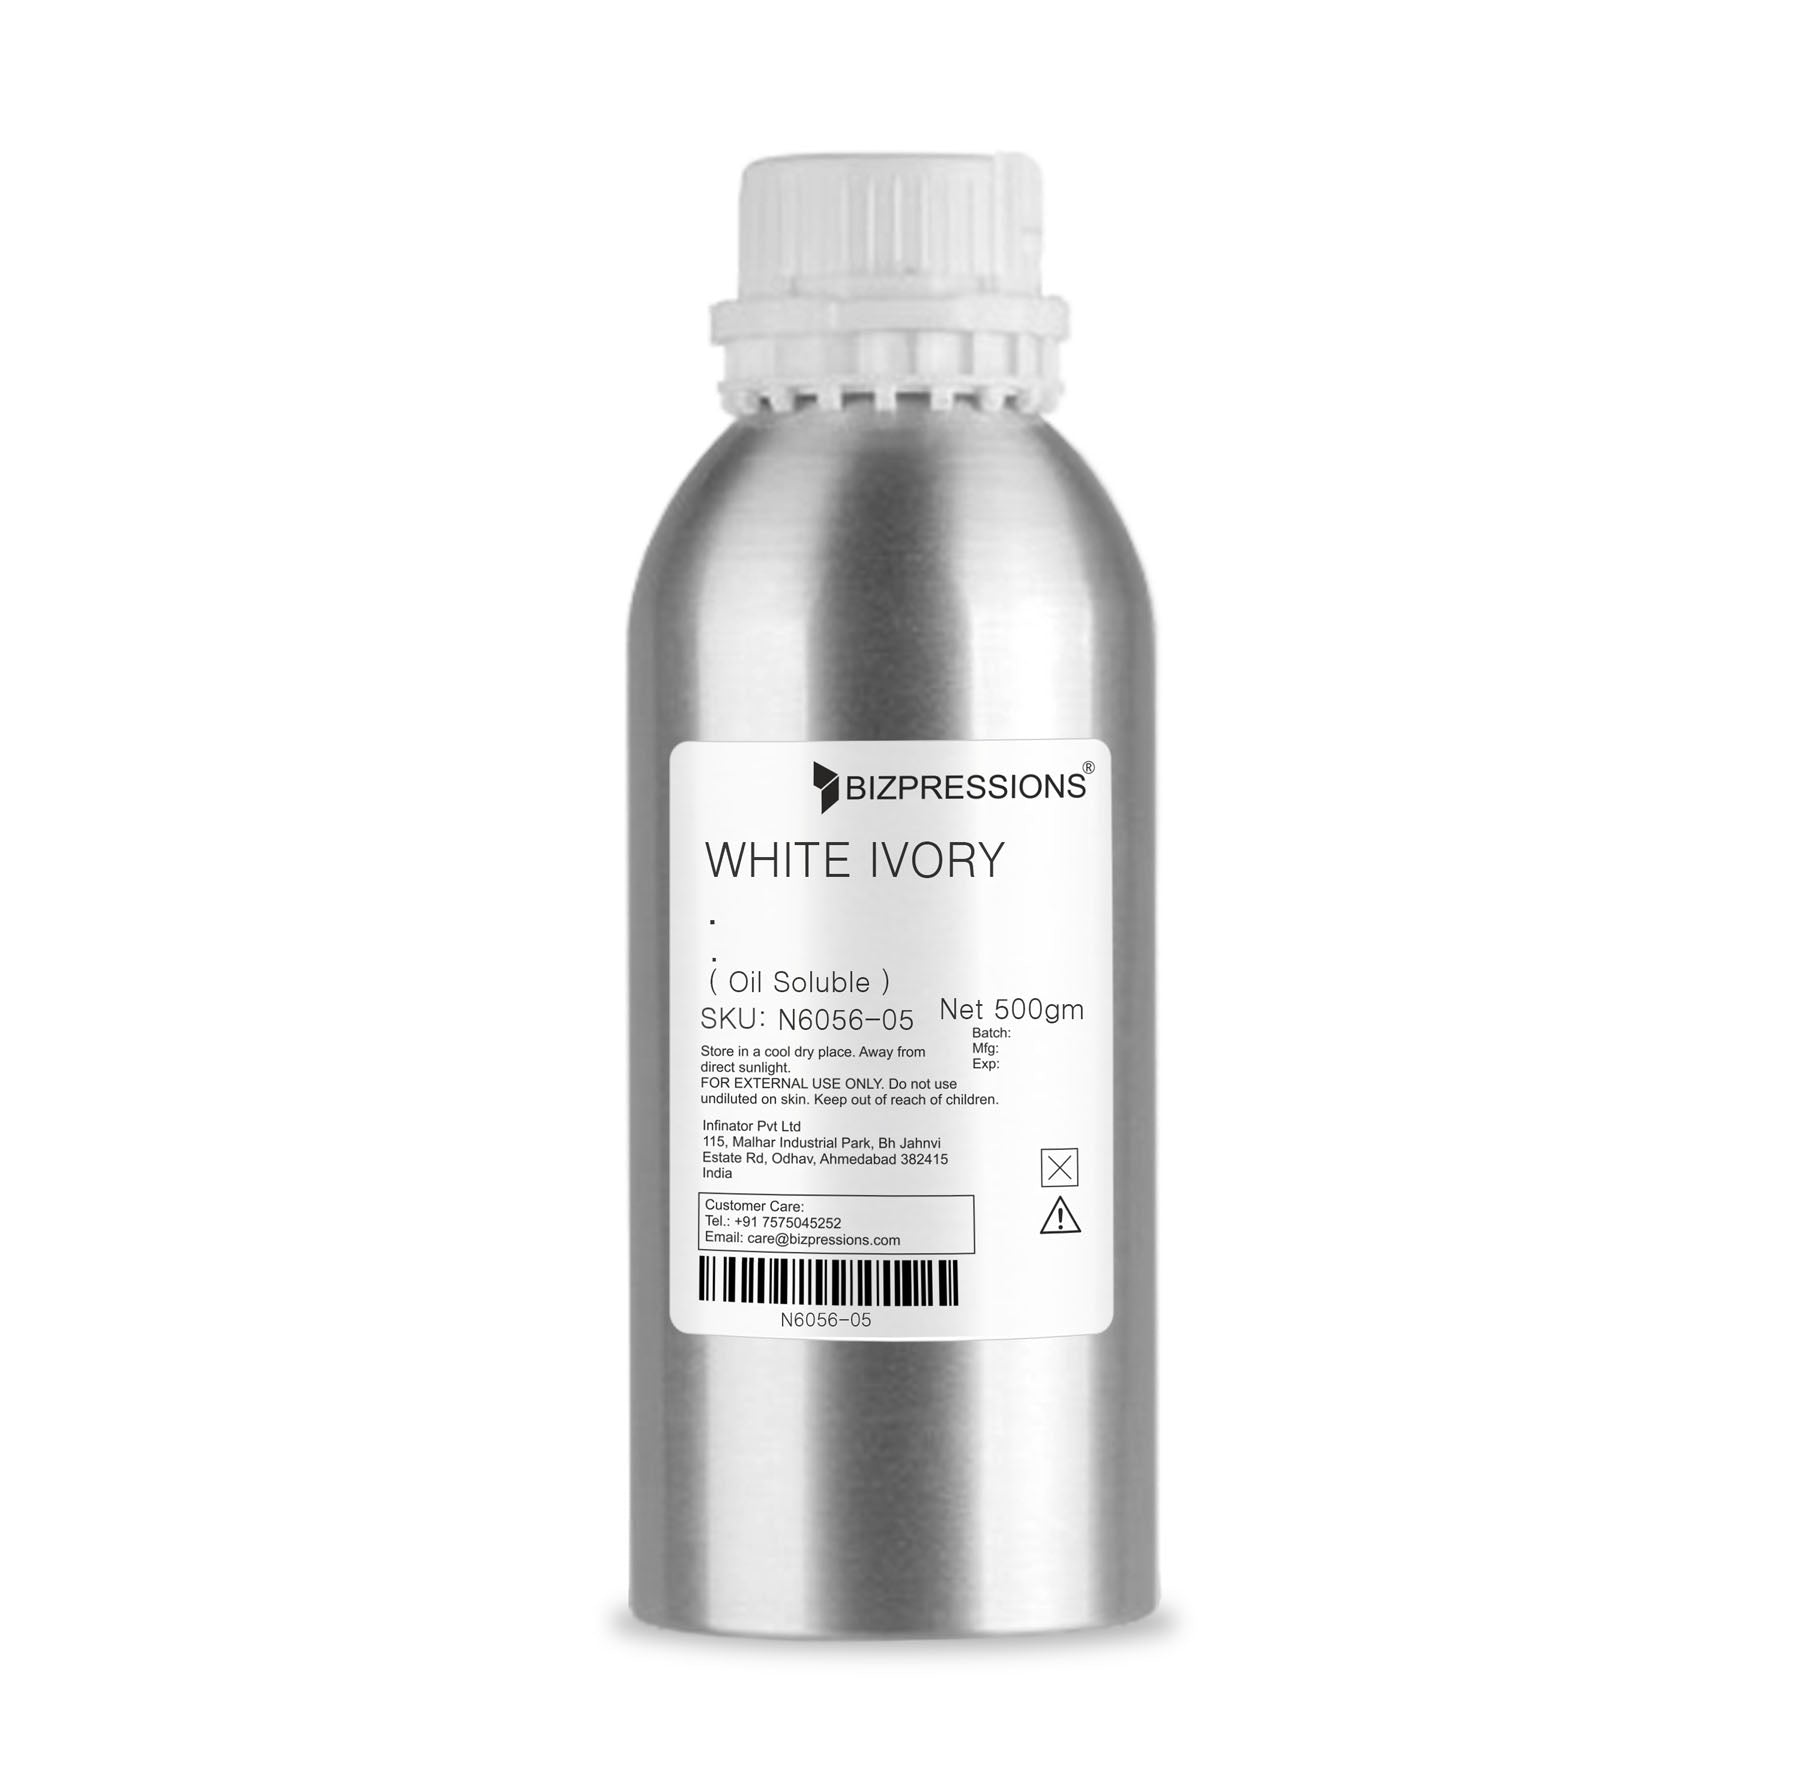 WHITE IVORY - Fragrance ( Oil Soluble ) - 500 gm